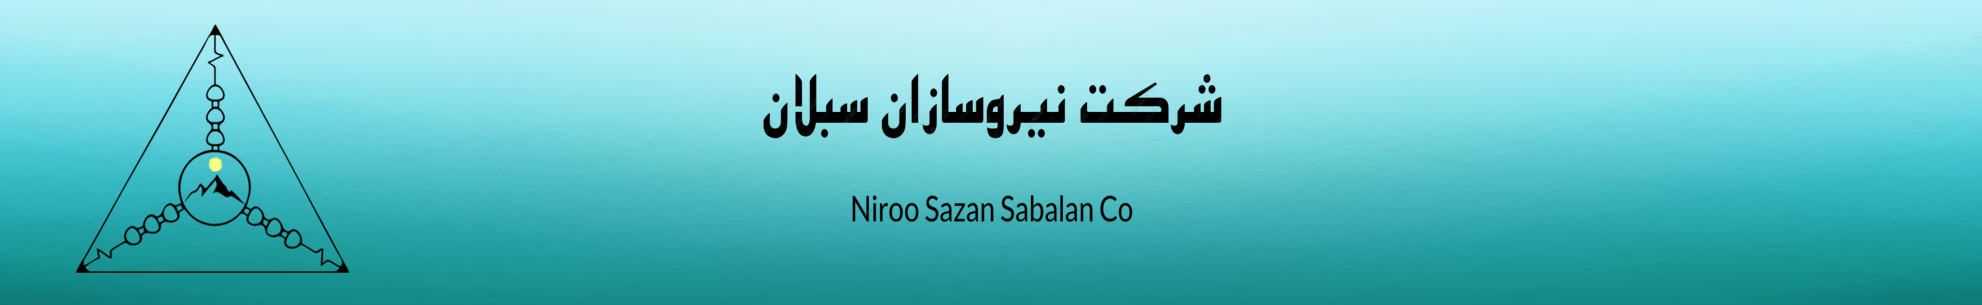 (Niroo Sazan Sabalan Co.) شرکت نیروسازان سبلان